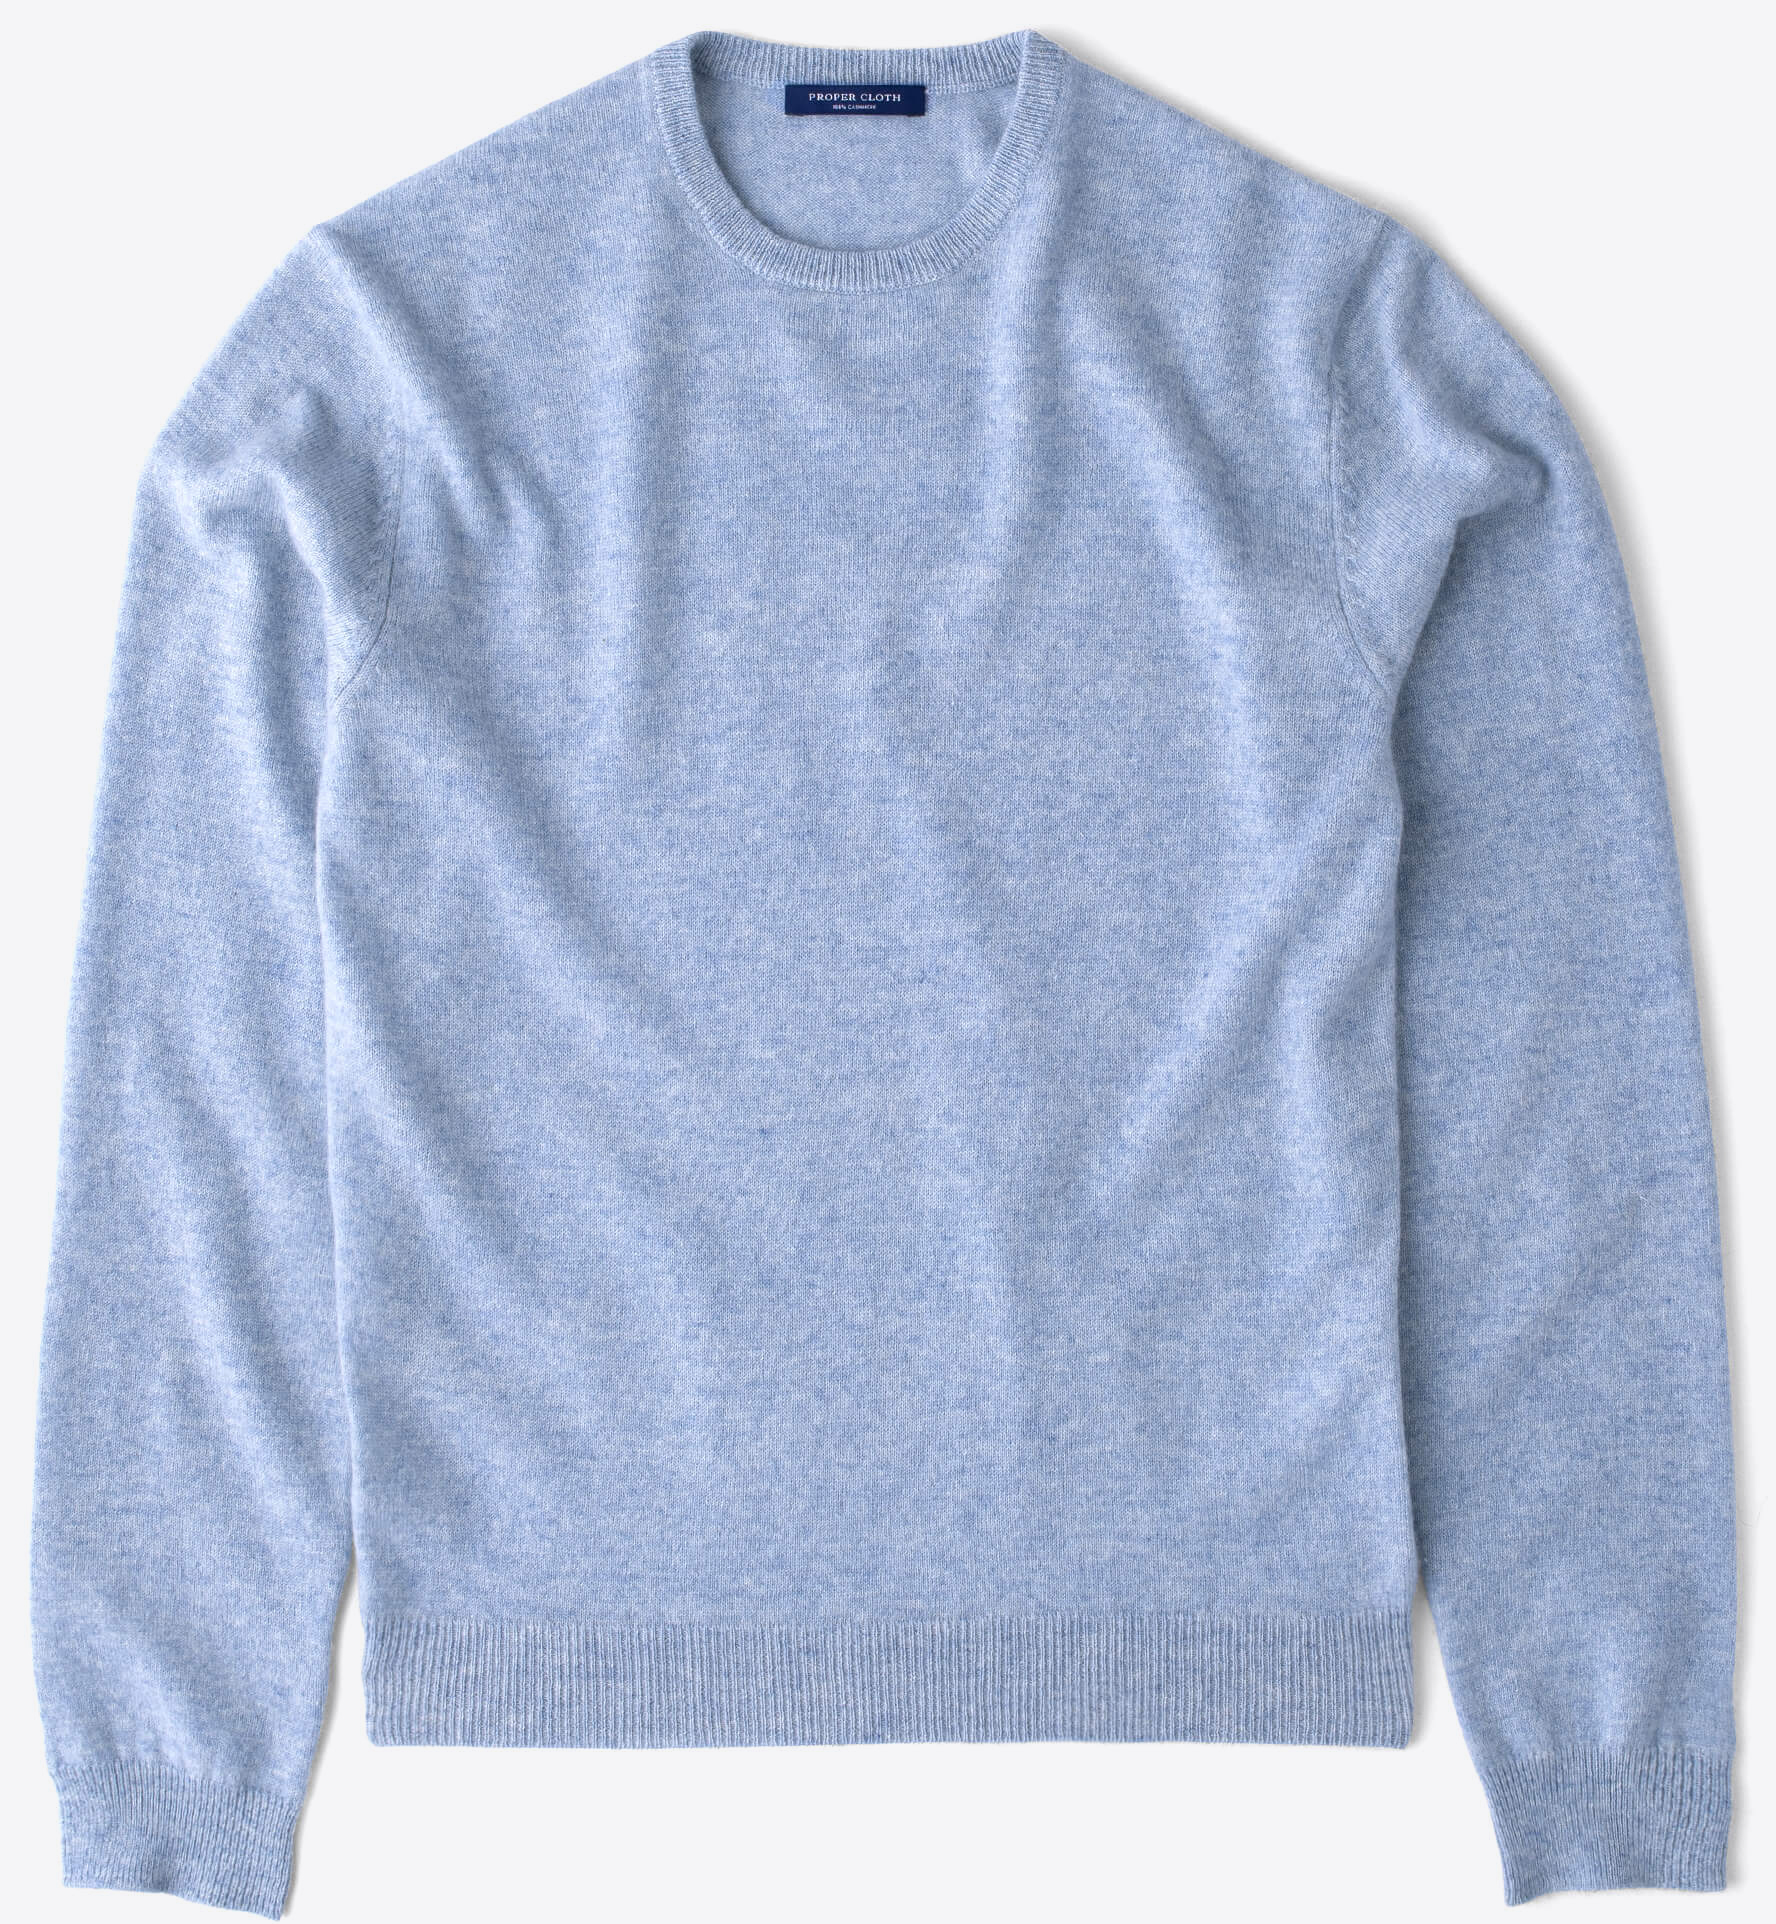 Light Blue Cashmere Crewneck Sweater by Proper Cloth